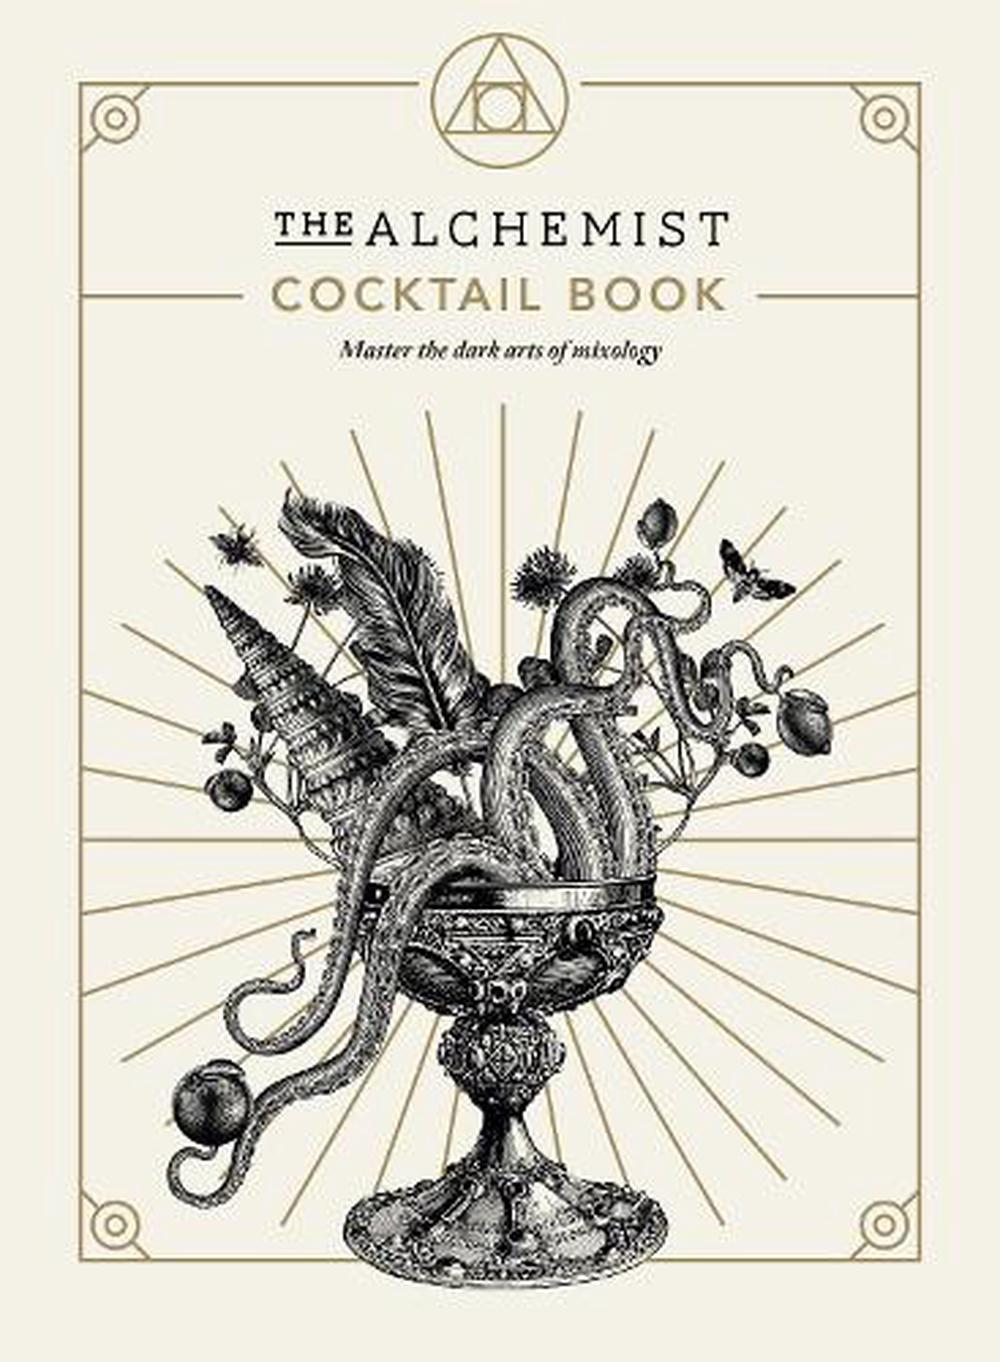 the alchemist cookbook movie same as book?